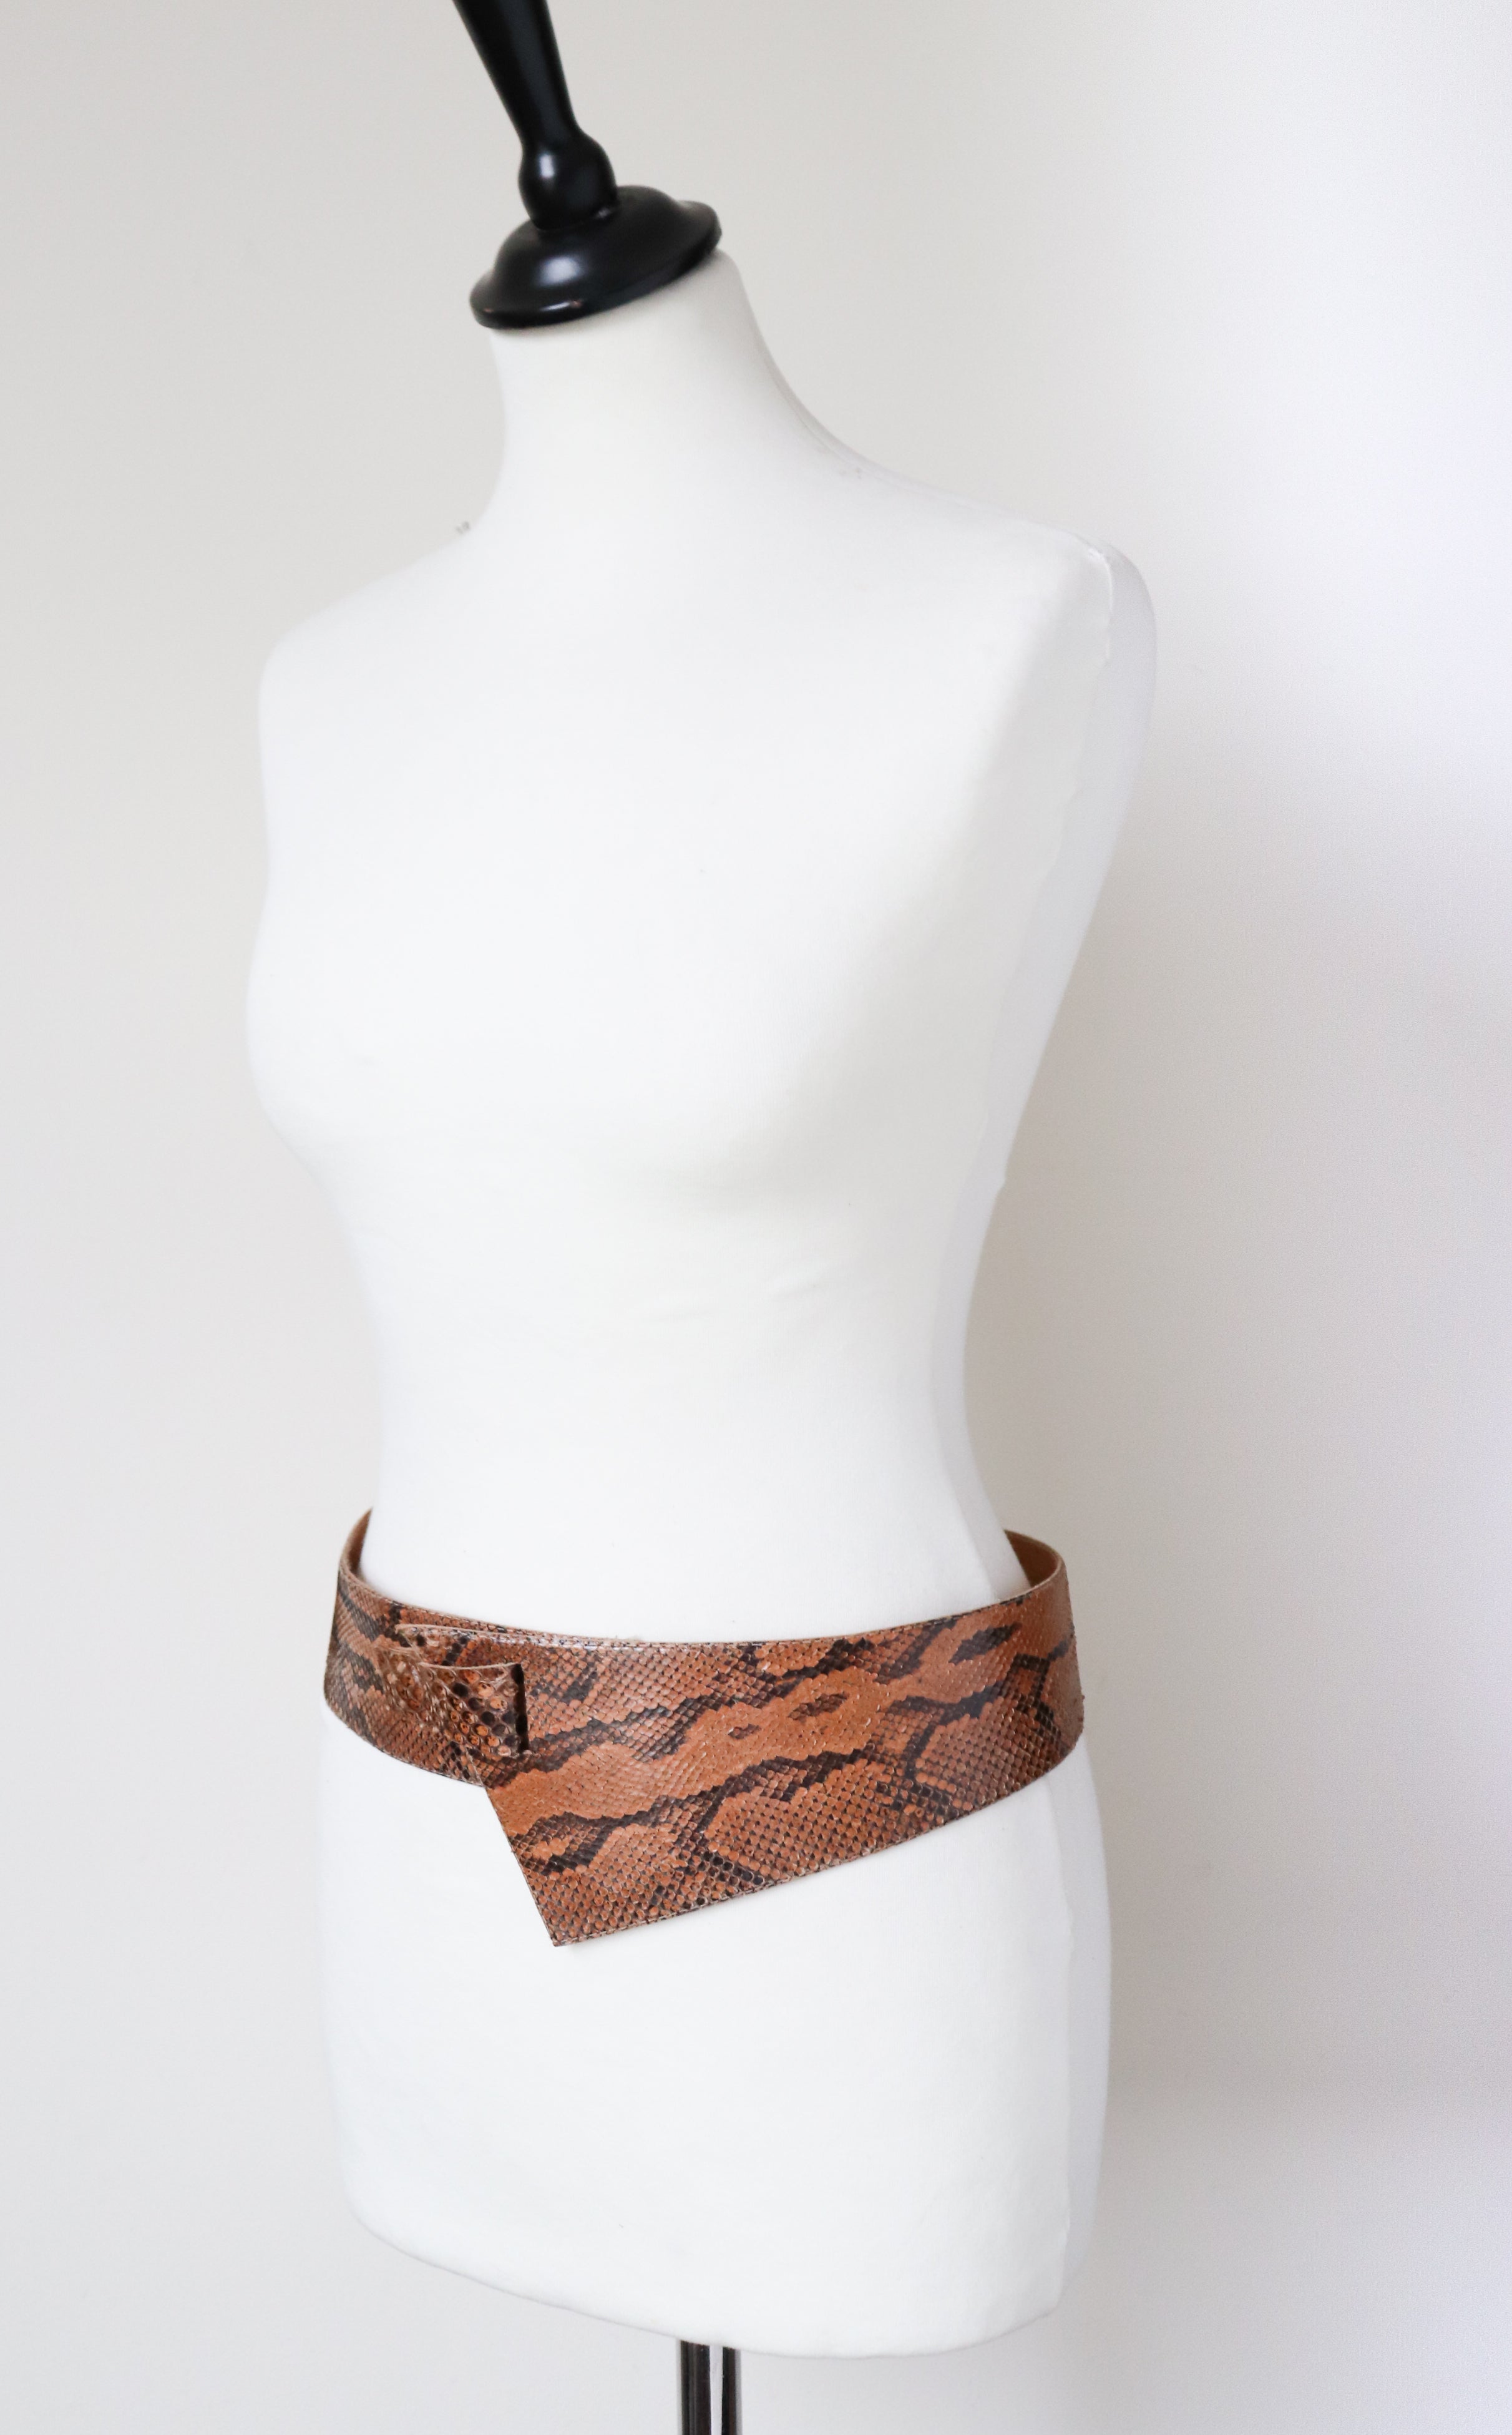 Genuine Snakeskin Tan Leather Vintage Corset Belt -  Wide - Brown  - Small